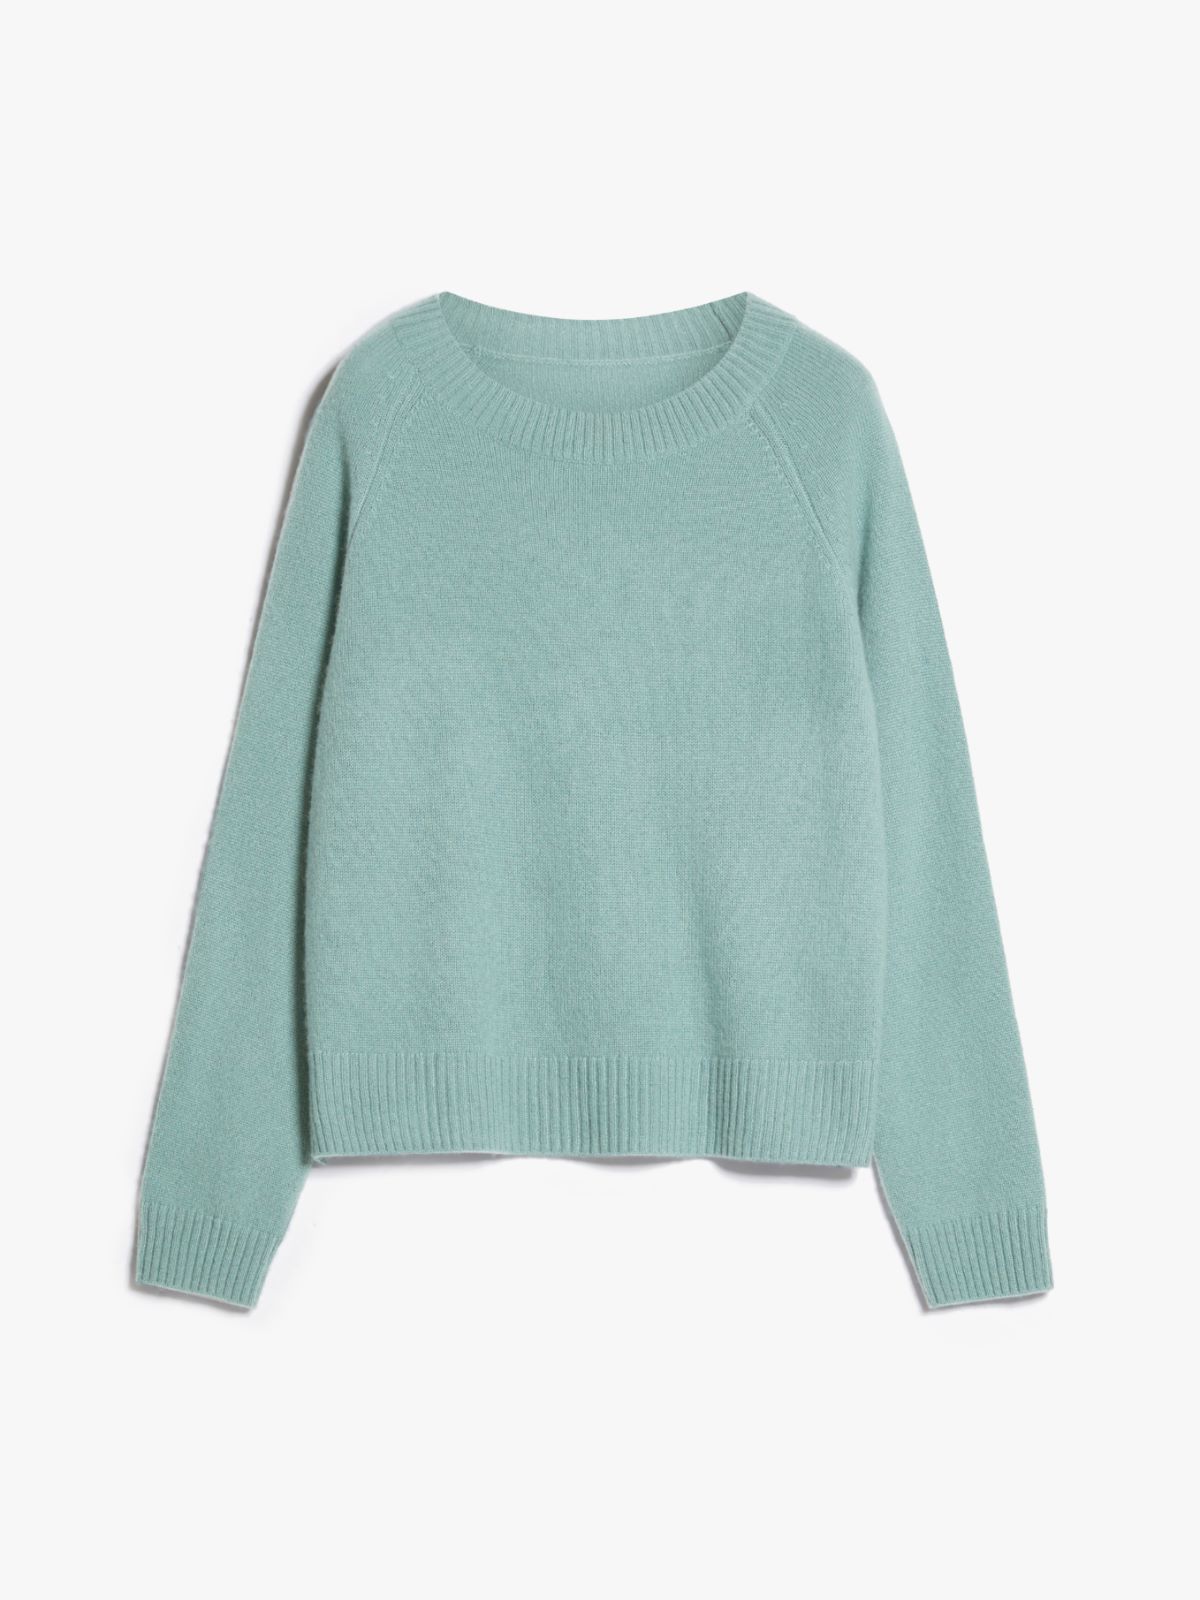 Cashmere sweater - SAGE GREEN - Weekend Max Mara - 6